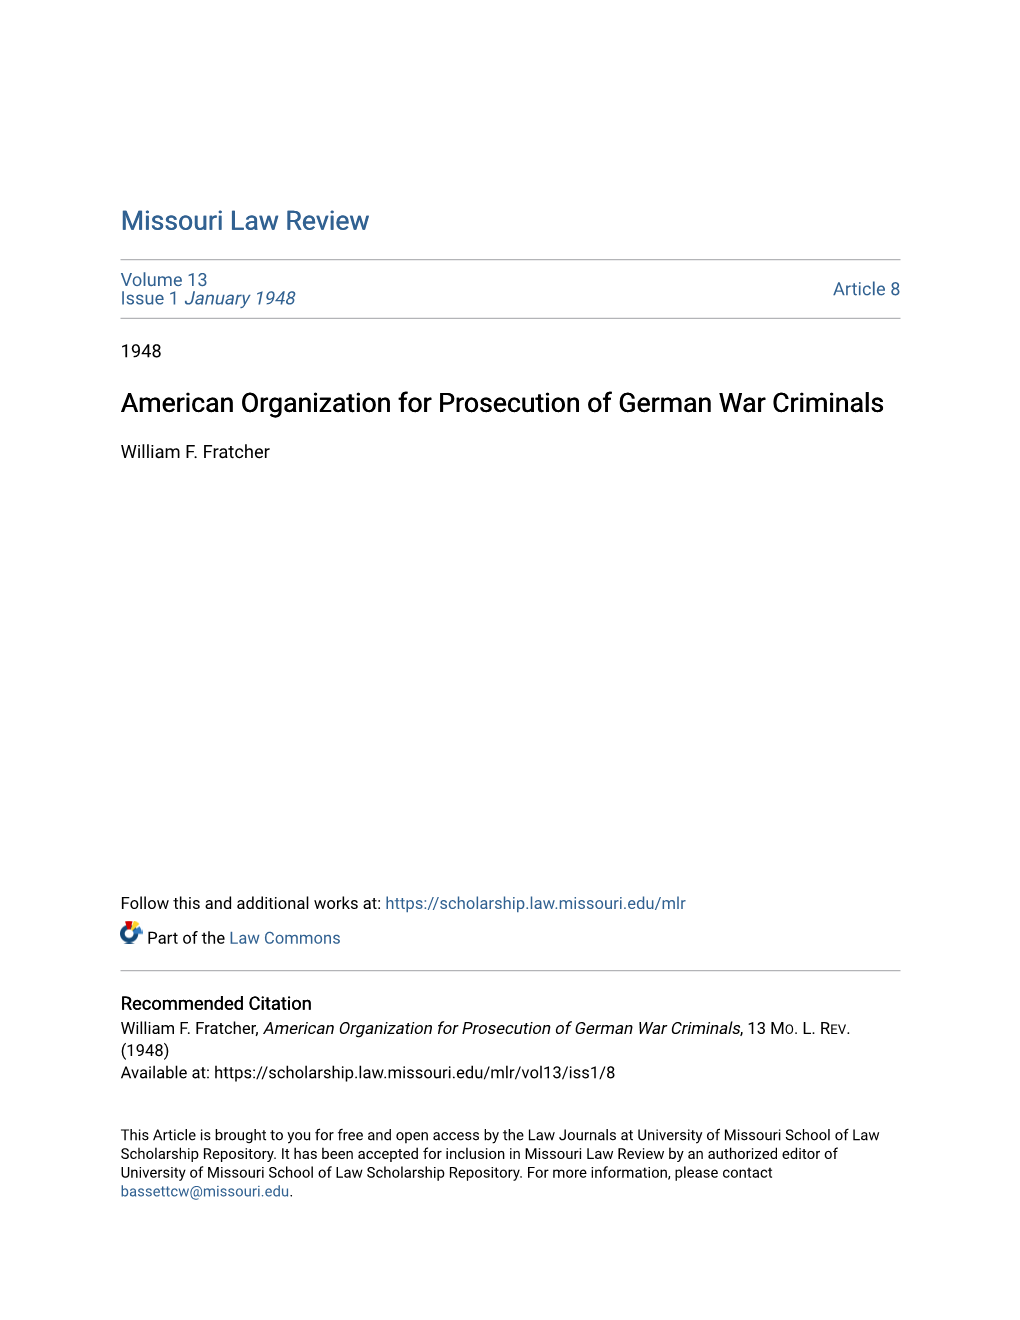 American Organization for Prosecution of German War Criminals